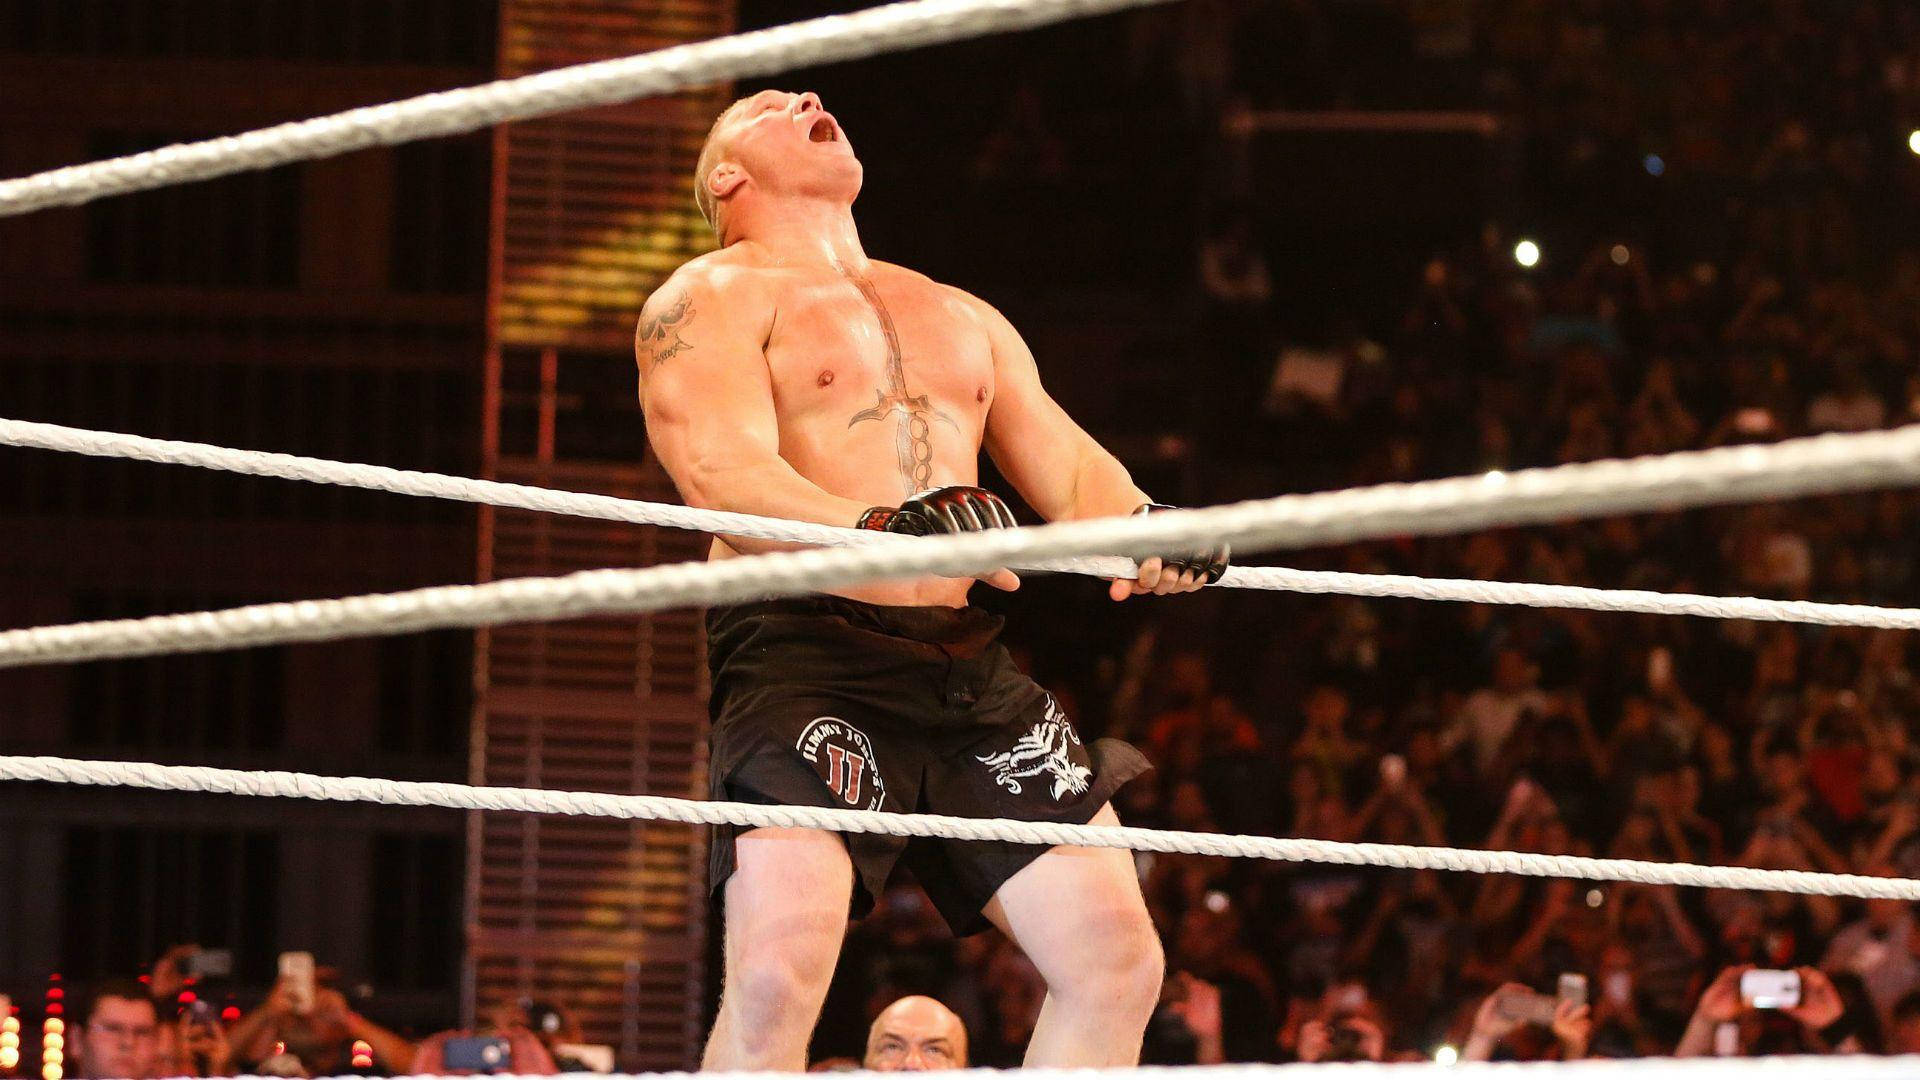 Brock Lesnar Dominating the Ring in Full Action Wallpaper